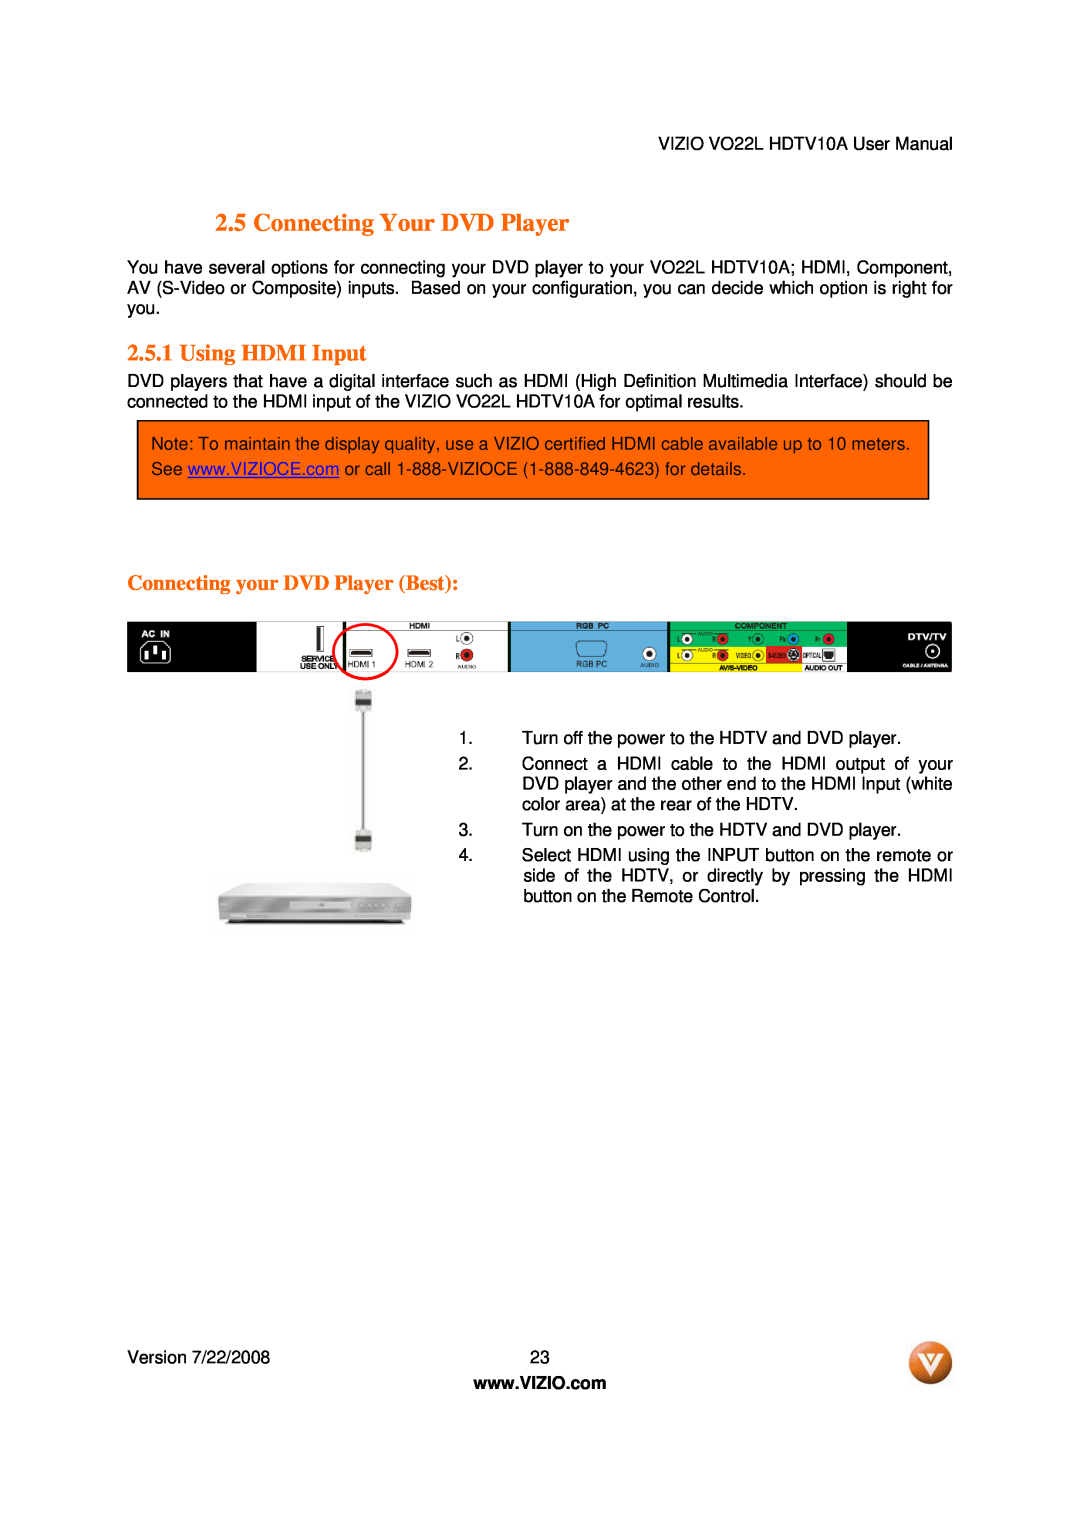 Vizio VO22L user manual Connecting Your DVD Player, Using HDMI Input, Connecting your DVD Player Best 